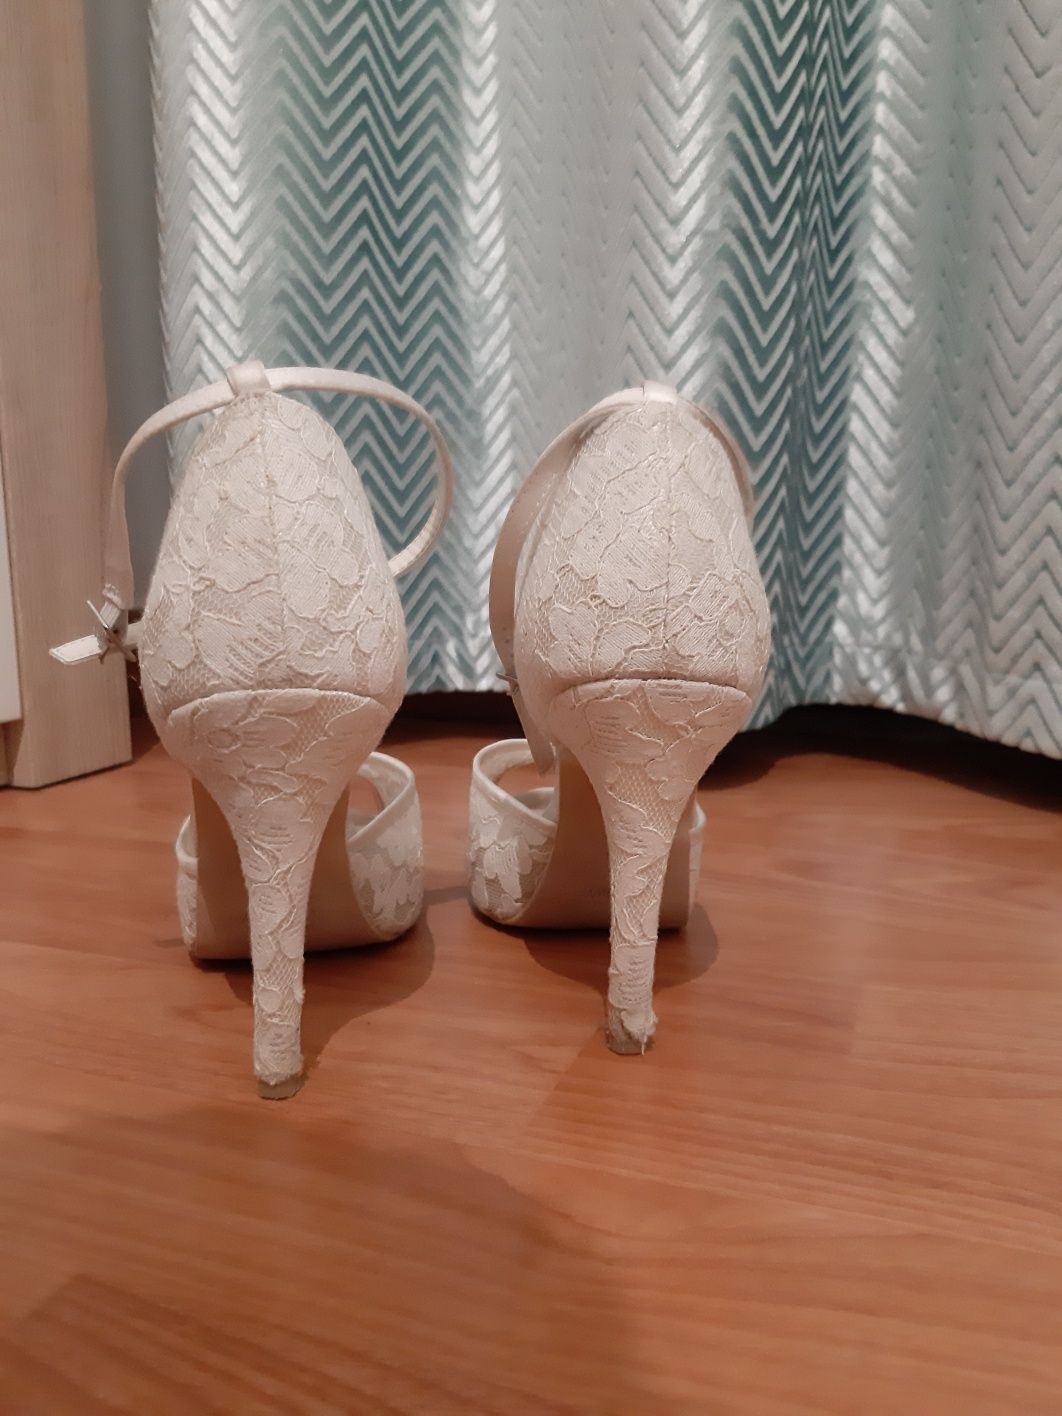 Sapatos brancos de noiva